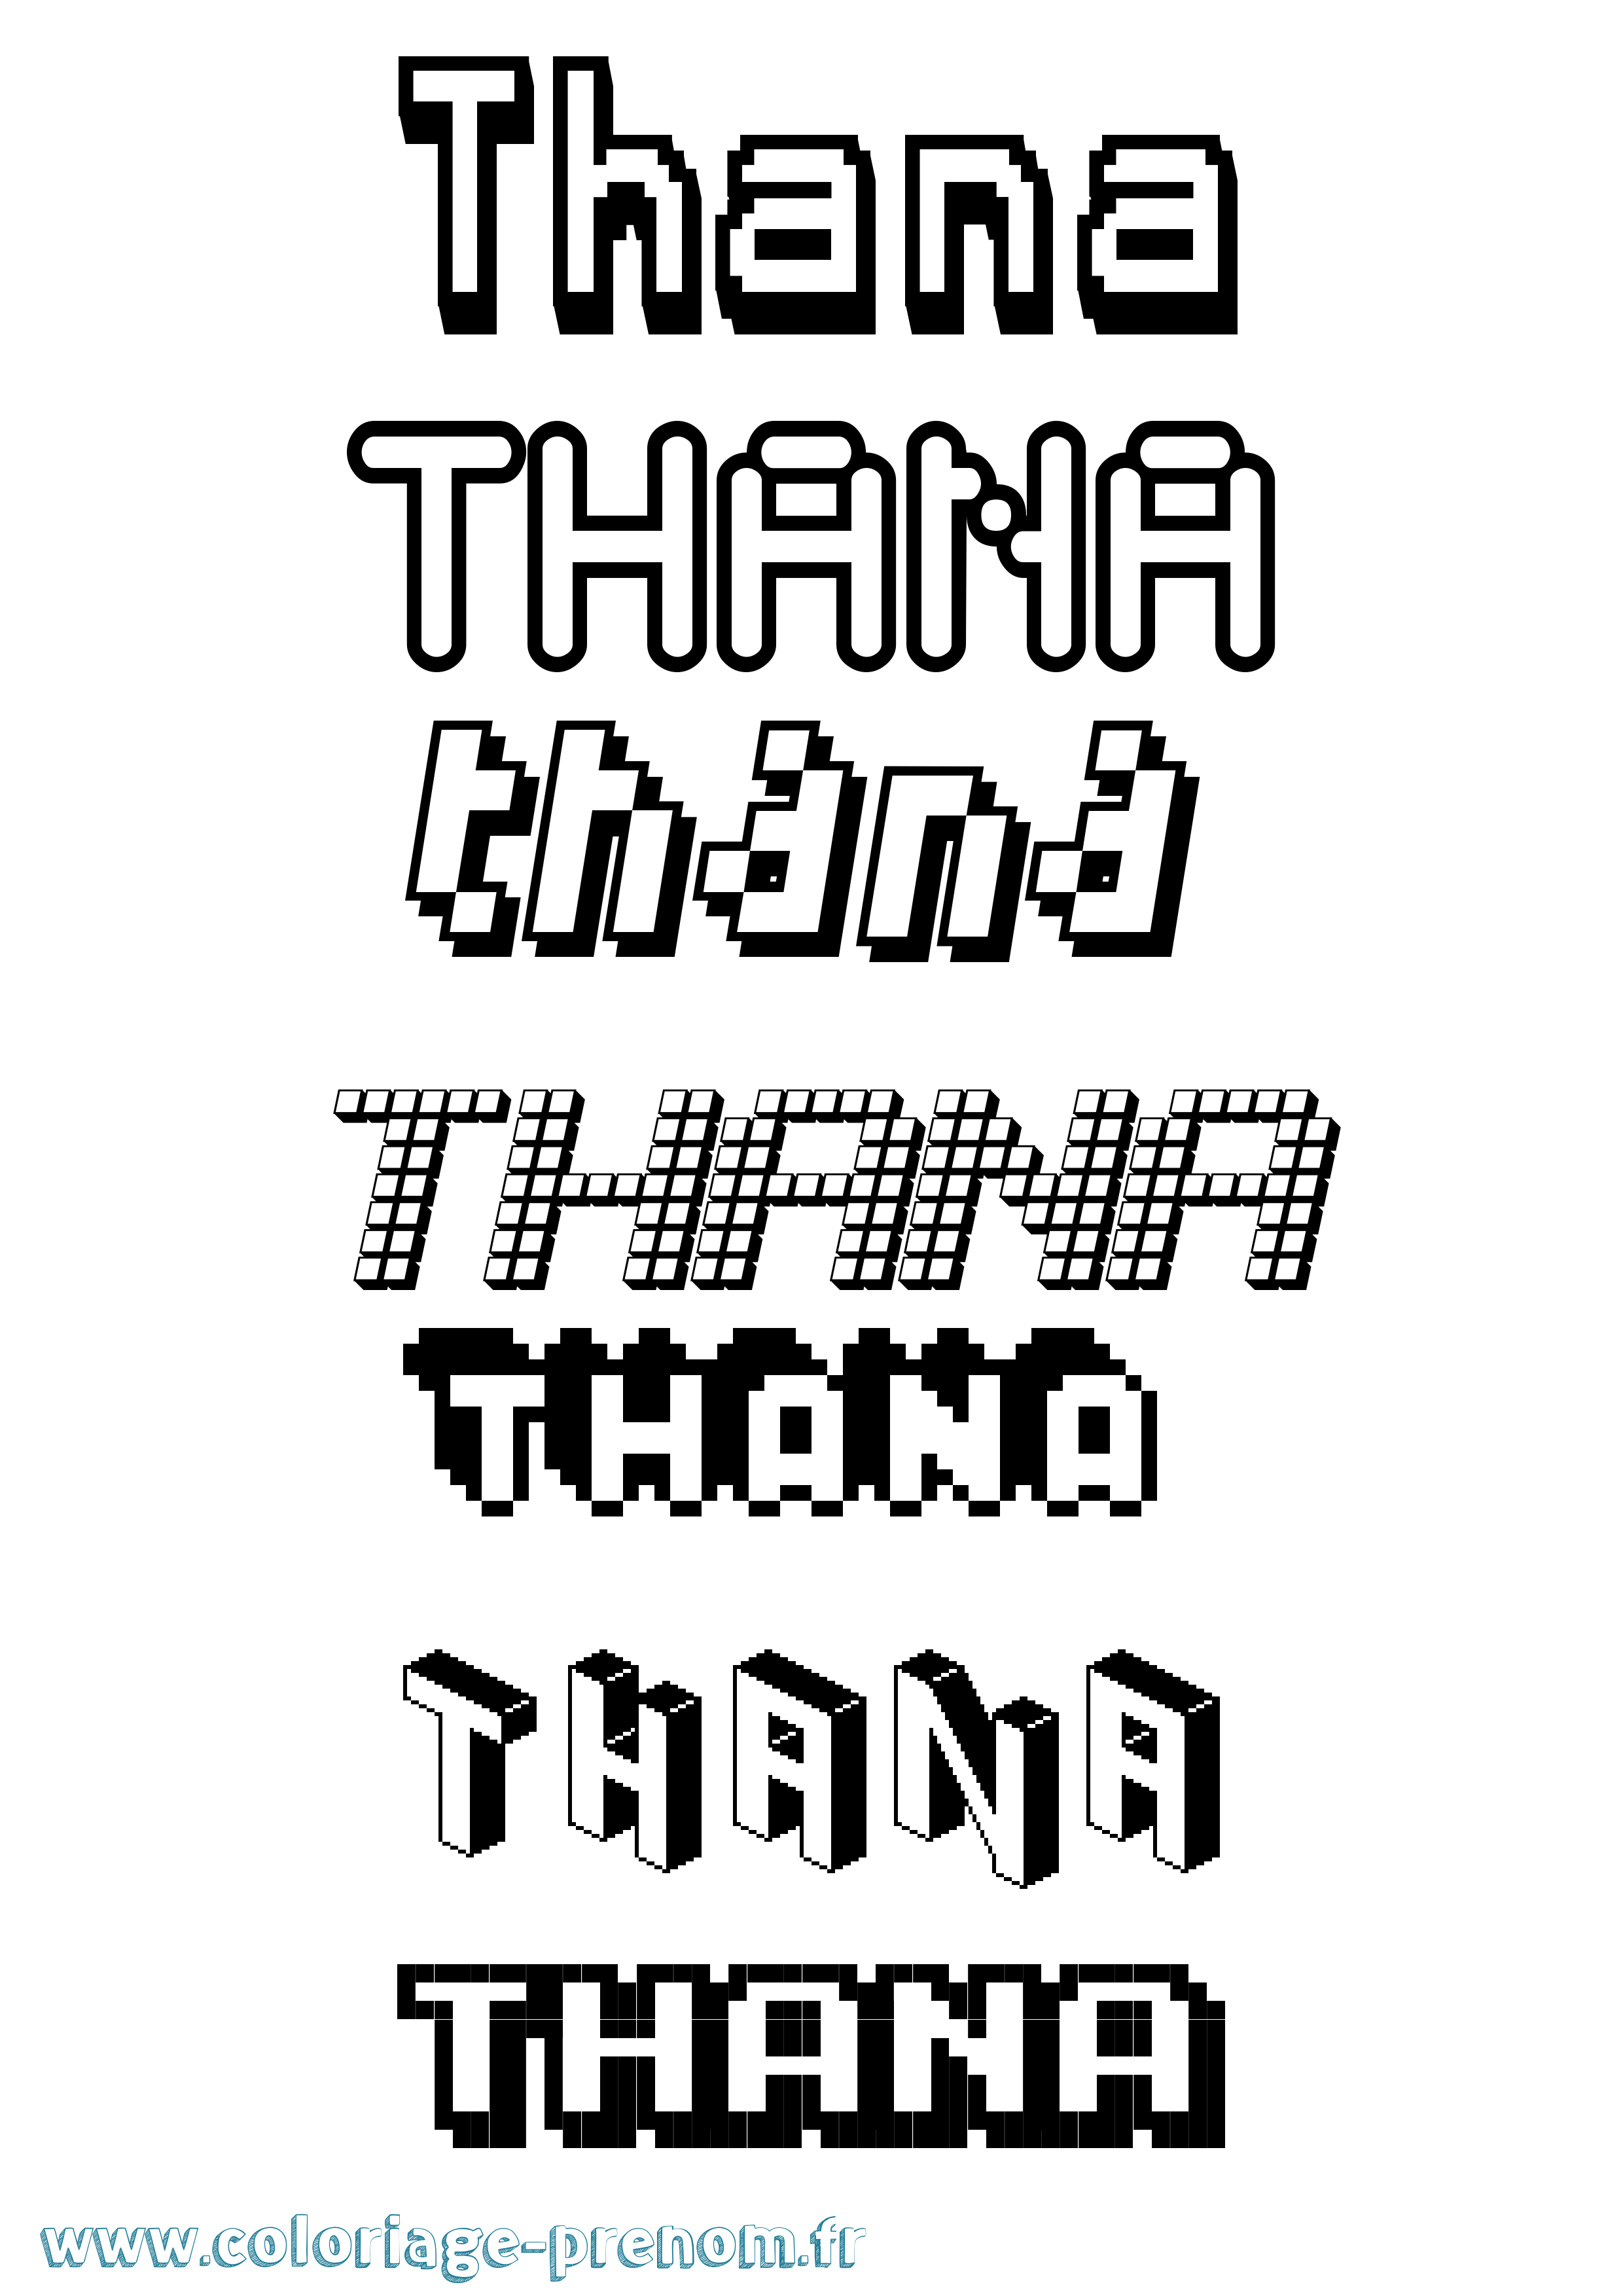 Coloriage prénom Thana Pixel